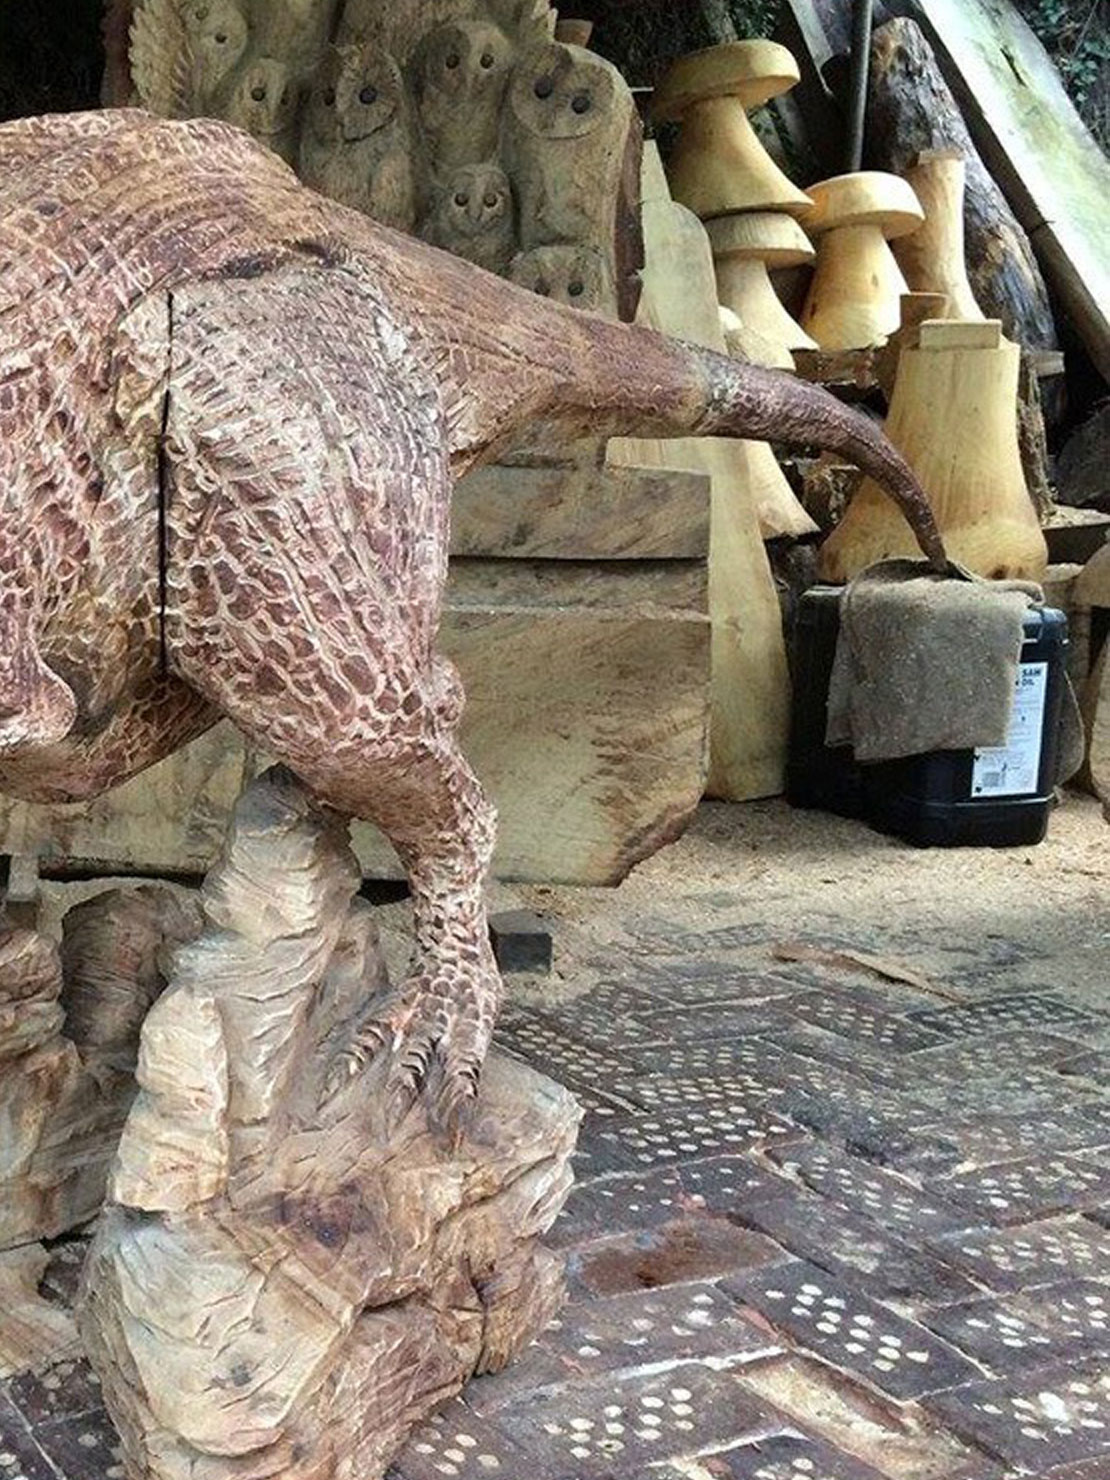 Tyrannosaurus Rex Sculpture by Matthew Crabb